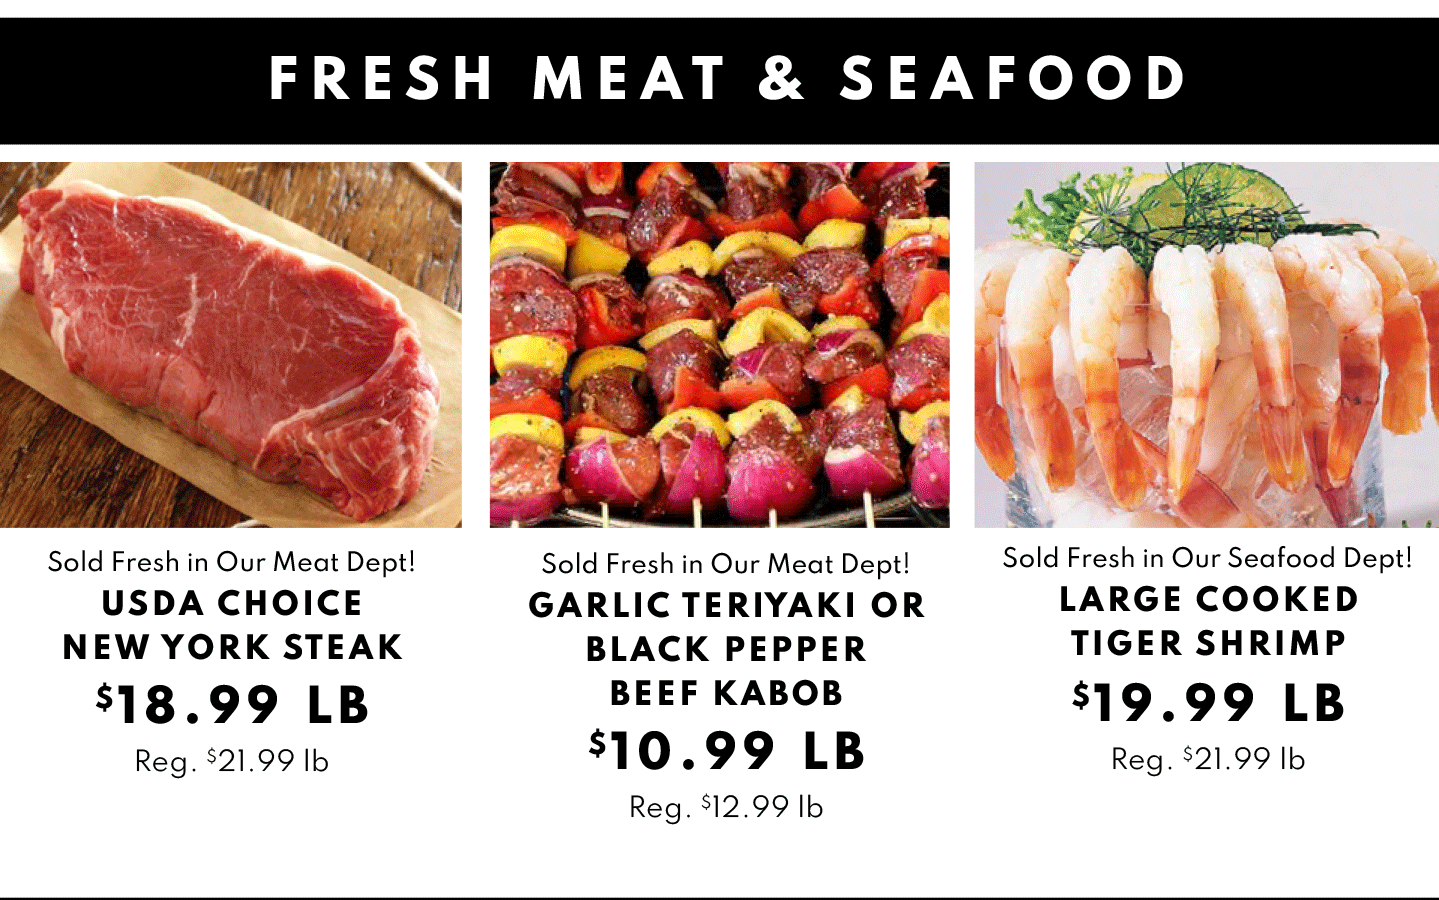 USDA Choice New York Steak $18.99 lb, Garlic Teriyaki or Black Pepper Beef KAbob $10.99 lb and Large Cooked Tiger Shrimp $19.99 lb